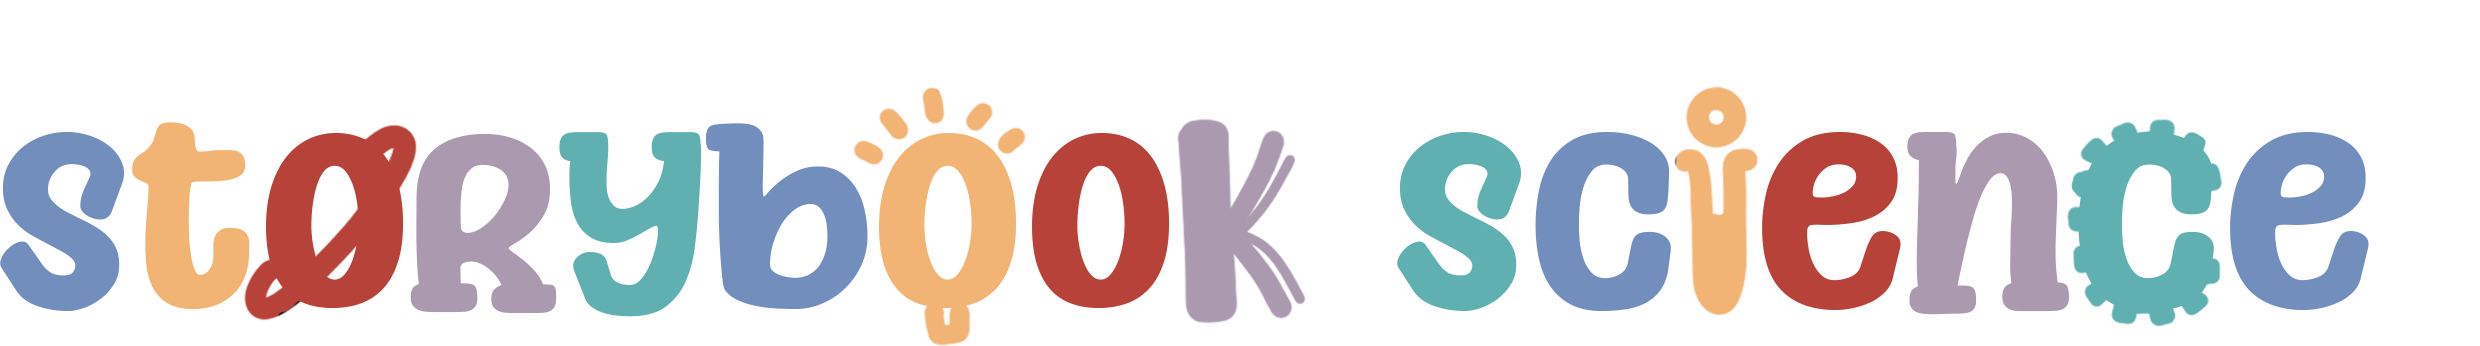 Storybook Science logo